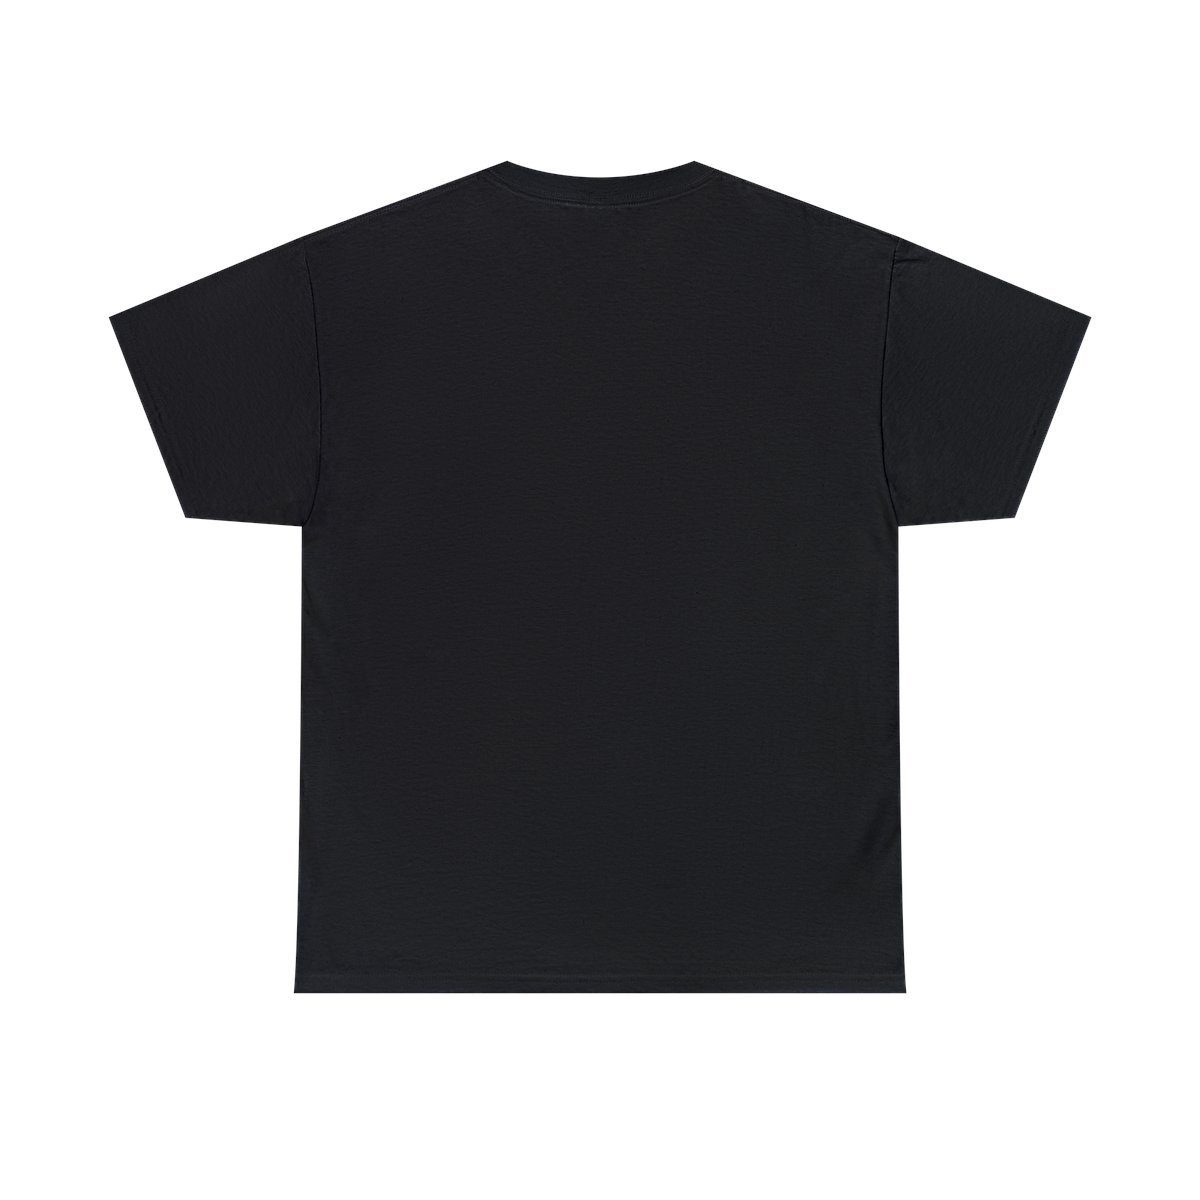 Aceldama – Skulls Short Sleeve T-shirt